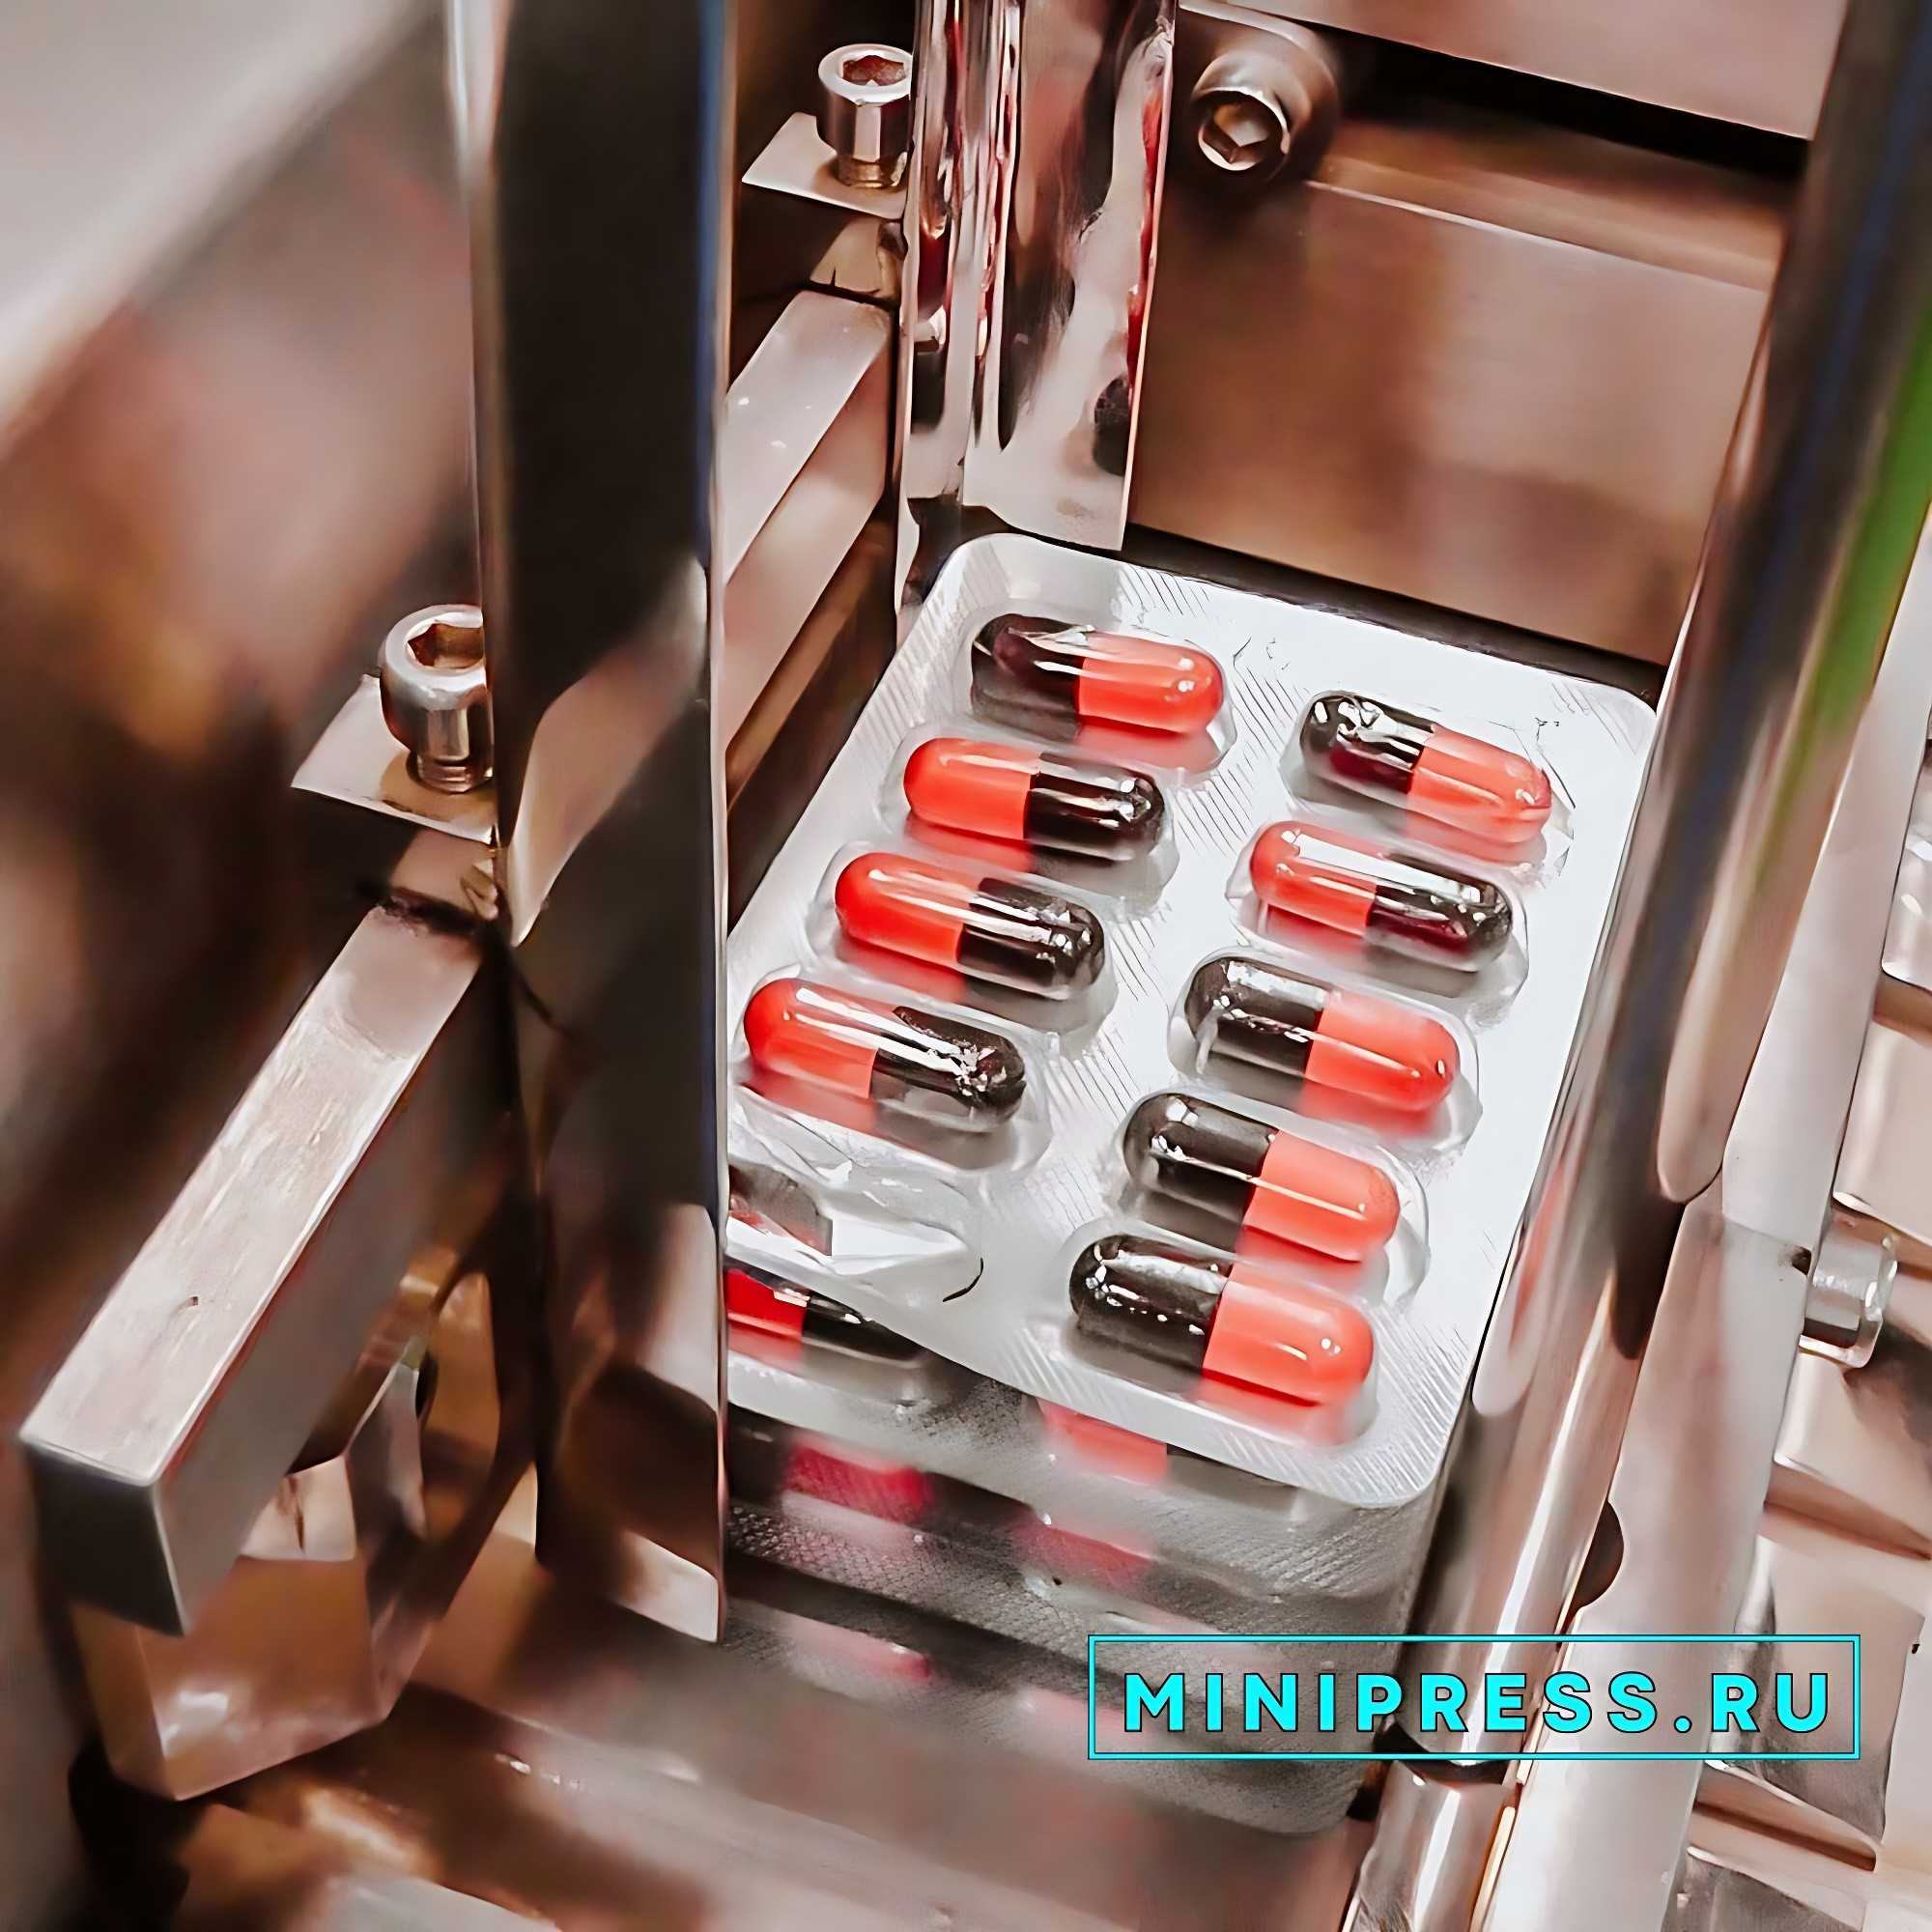 laboratory methods of blood testing